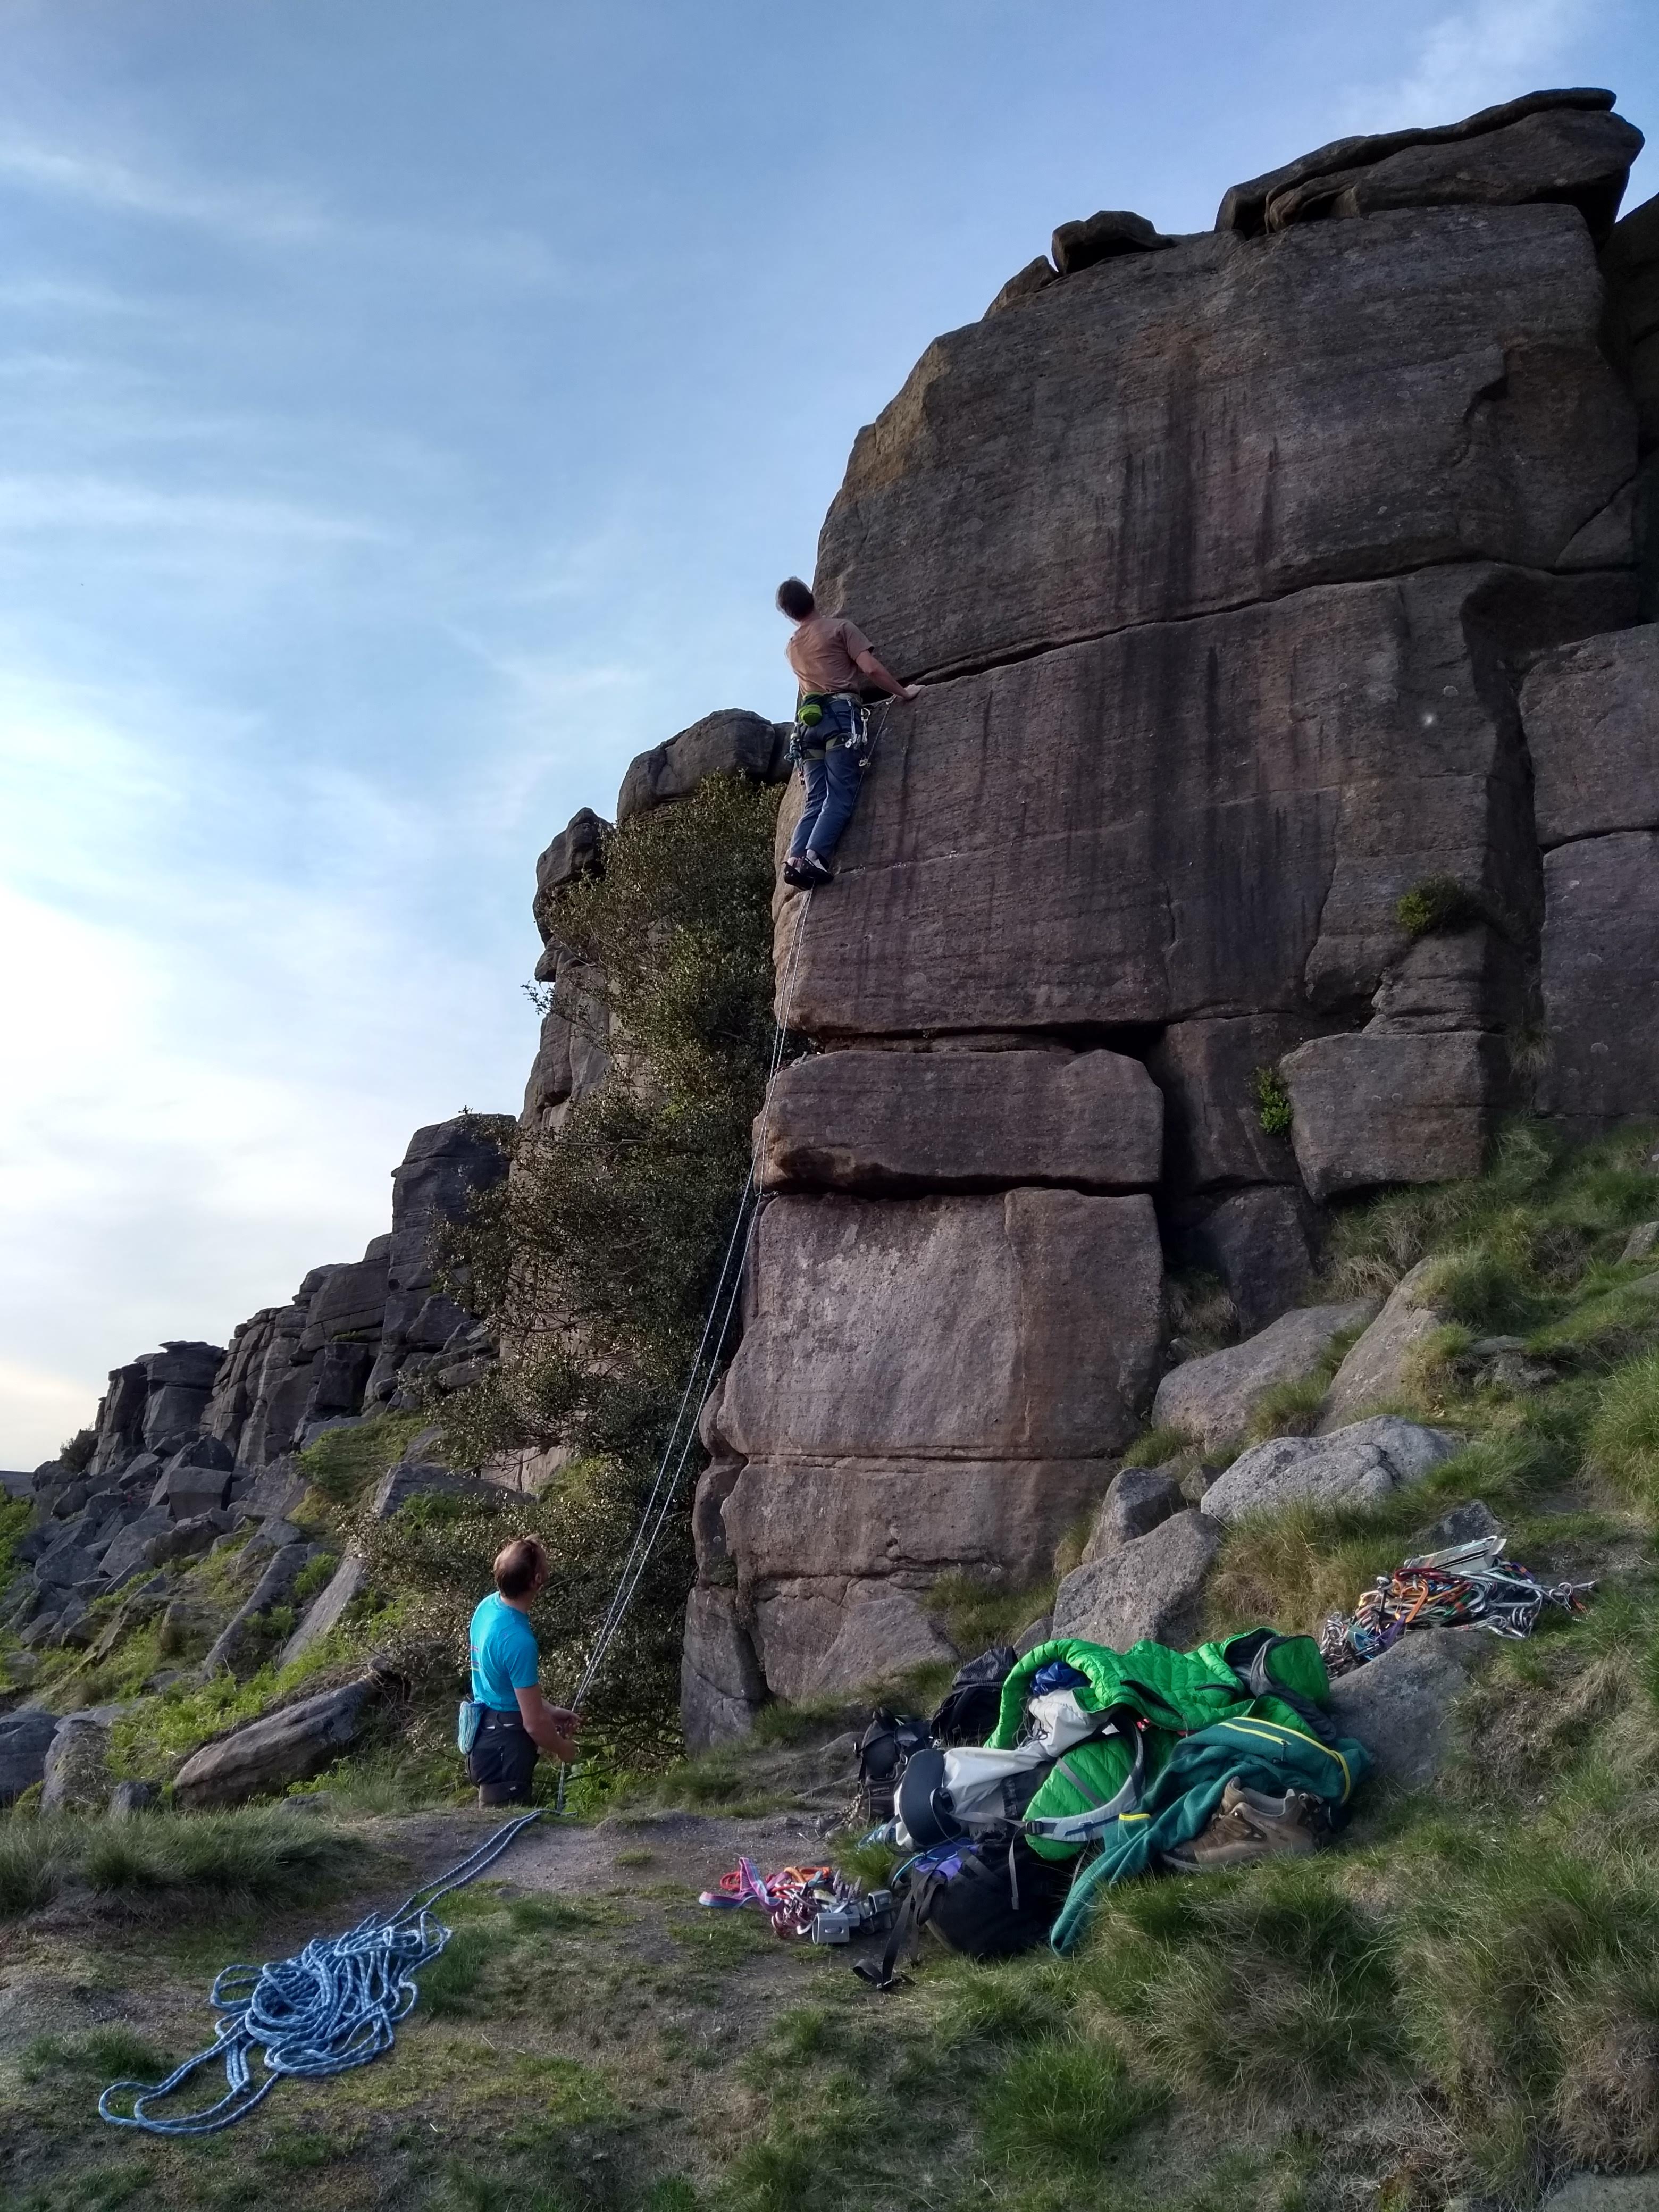 Peak District/Sheffield climbing club on August Arete, Stanage